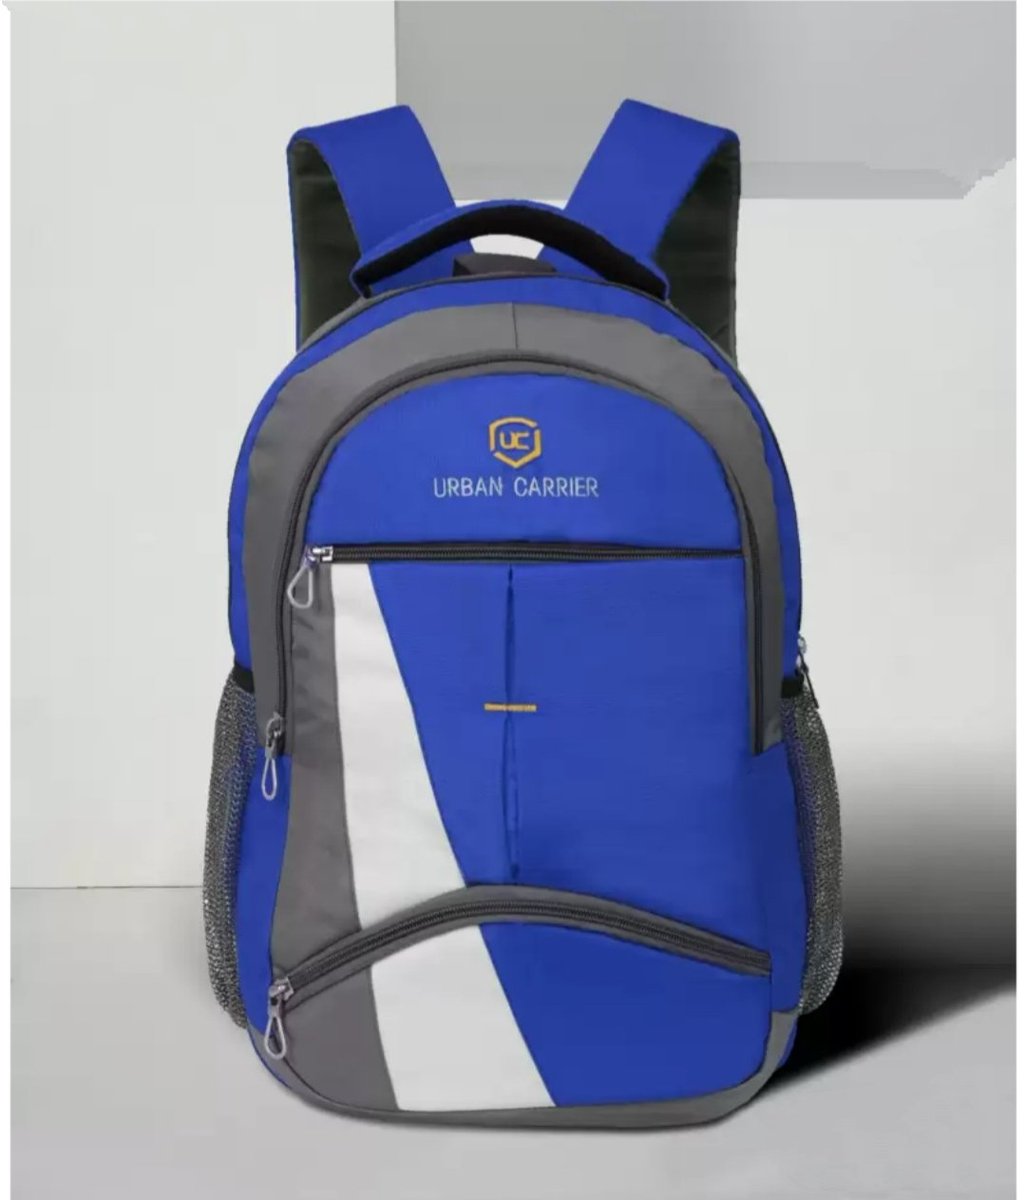 🔥Big Size School/ College Backpack ₹299/-

Link ➡️ fktr.in/5ggrdZw

#schoolbags #schoolbag #bags #backtoschool #backpack #school #bag #schoolbagsforkids #backpacks #kids #fashion #kidsschoolbag #schoolbagpack #schoolbagkids #kidsbags #slippers #schoolbagcollection #hand